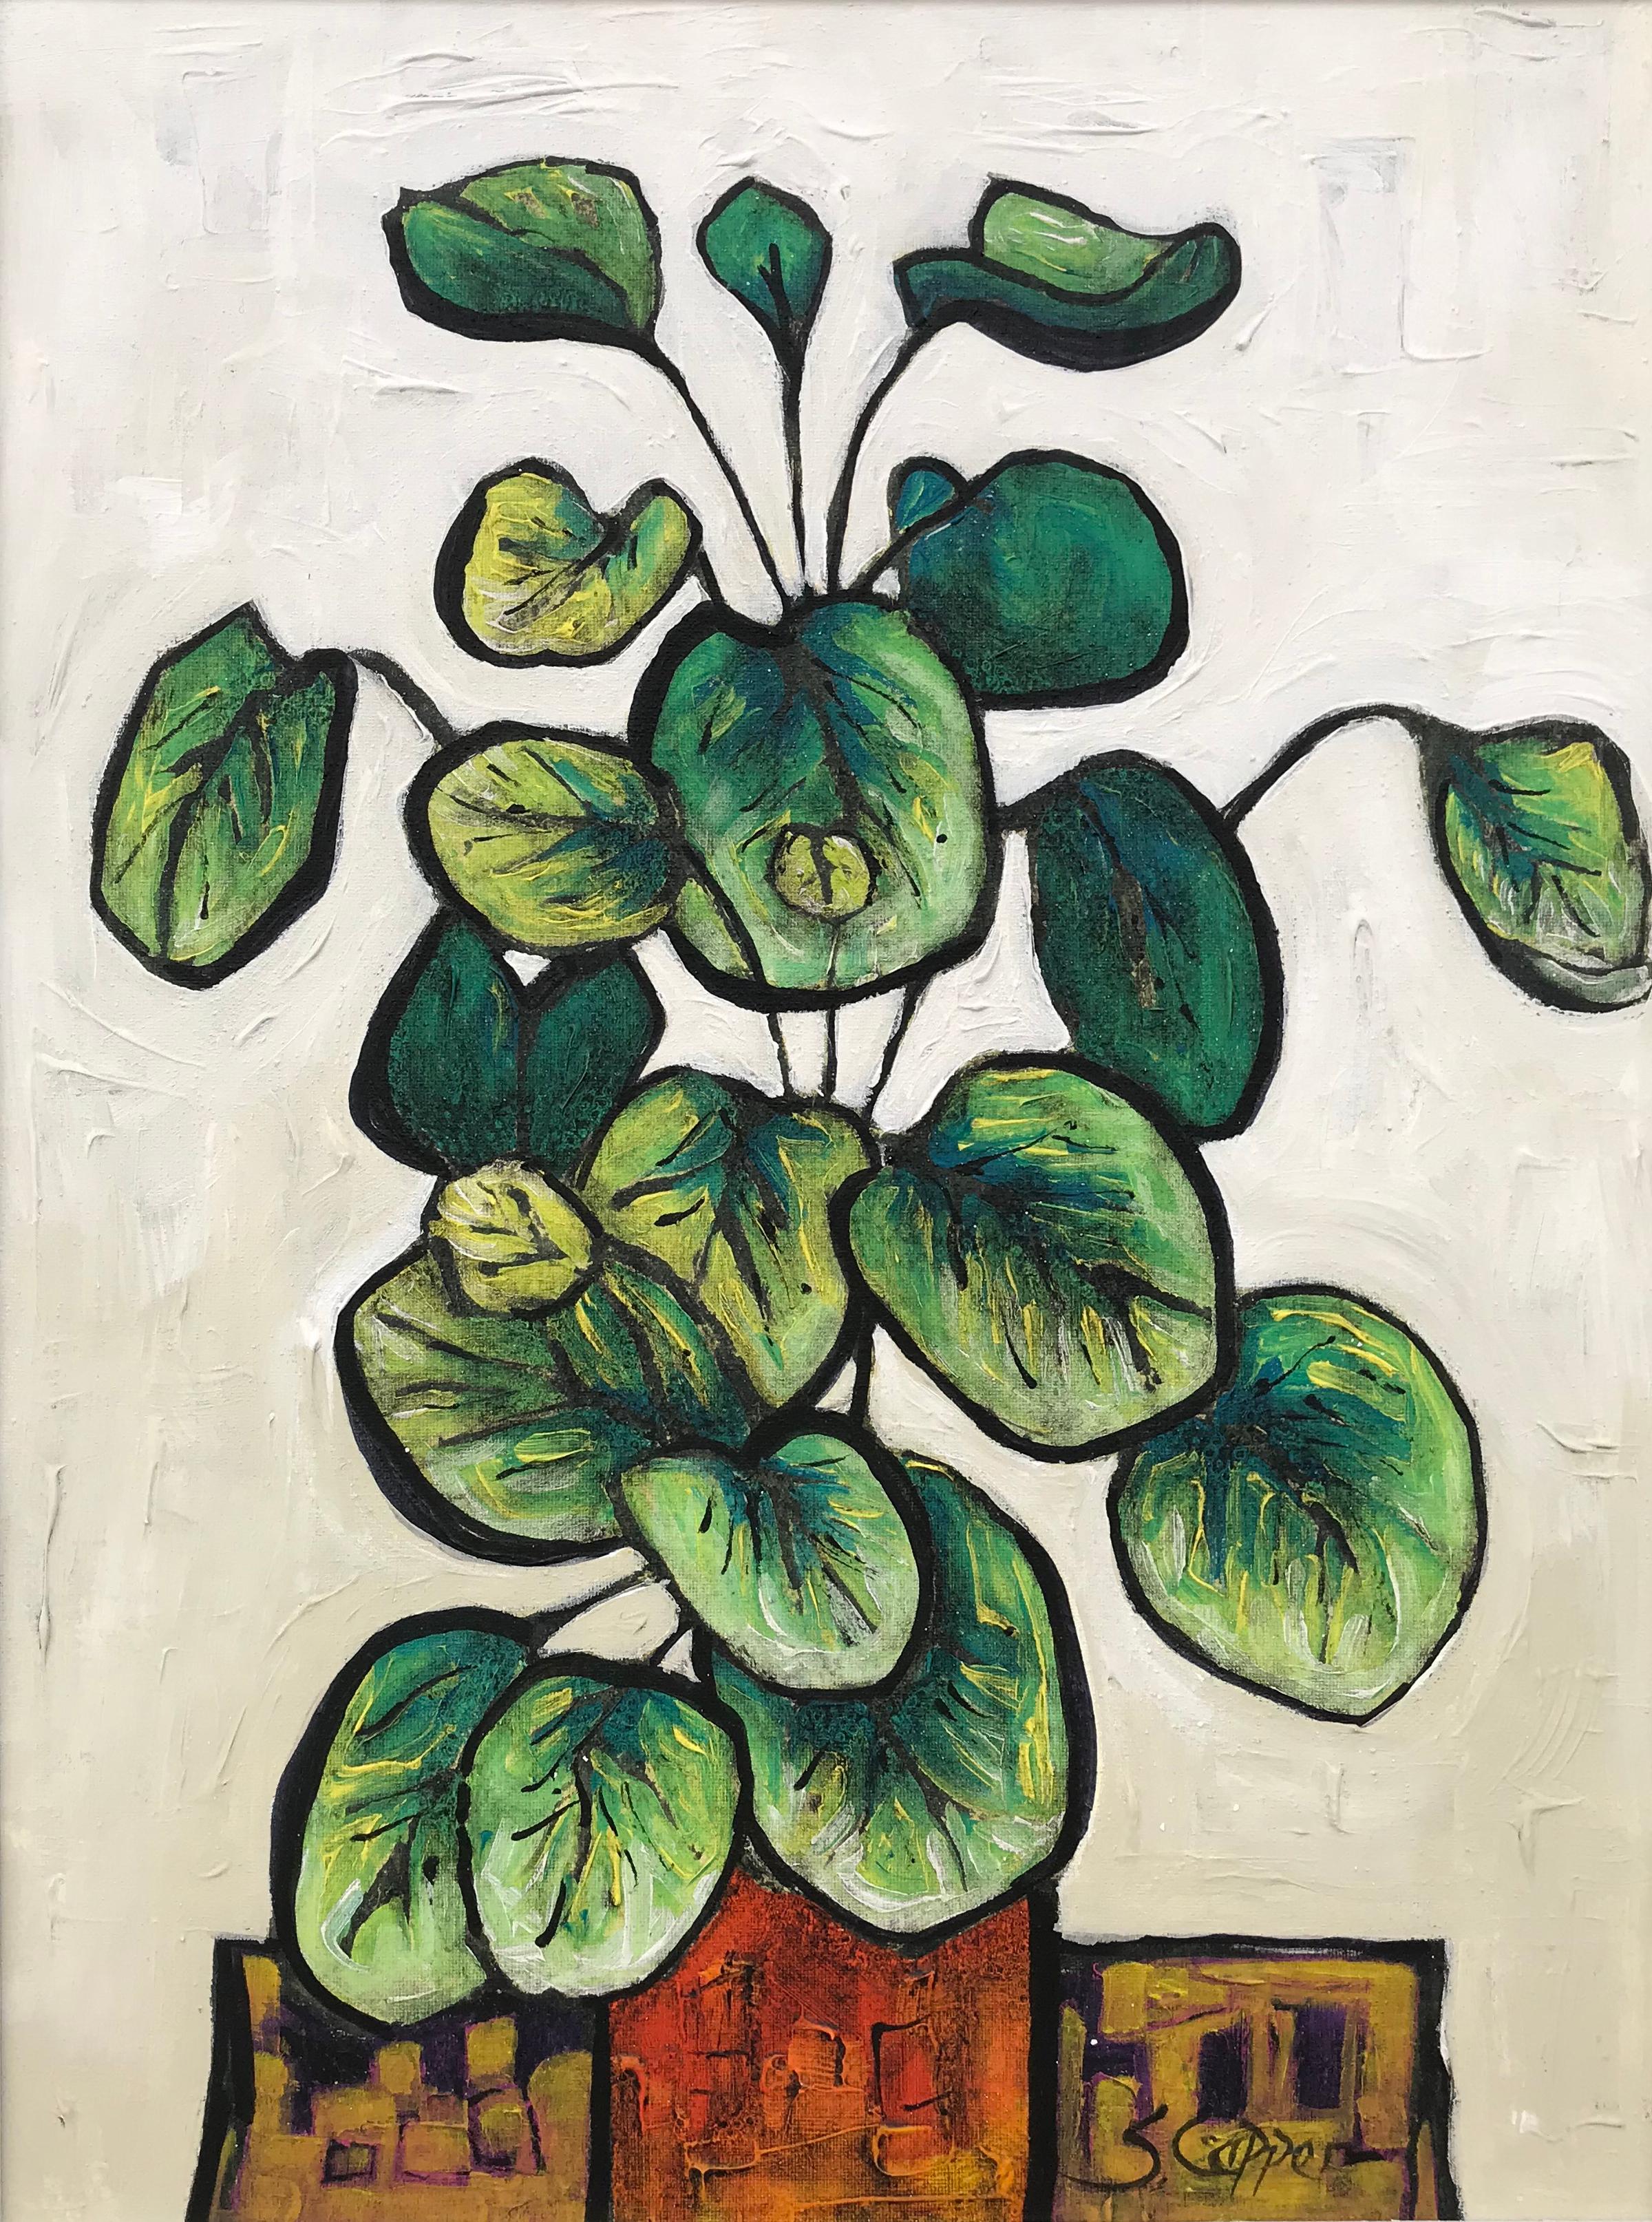 Steve Capper Still-Life Painting - Still Life Painting of Green Plant by Cubist Fauvist Modern 20thC British Artist